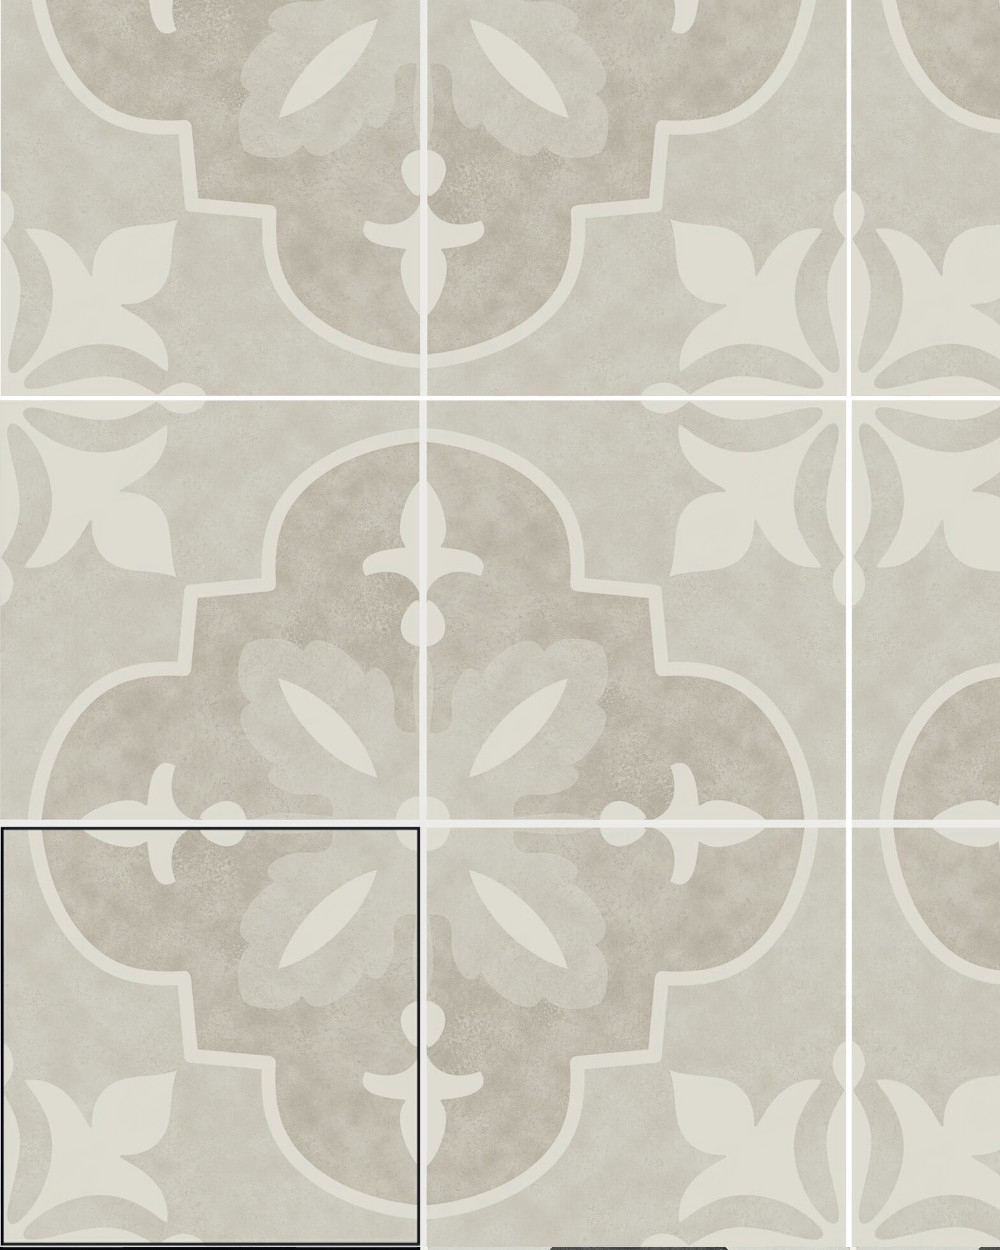 Motif tiles with art nouveau motif Grey White | NORA PUMICE 15X15 cm